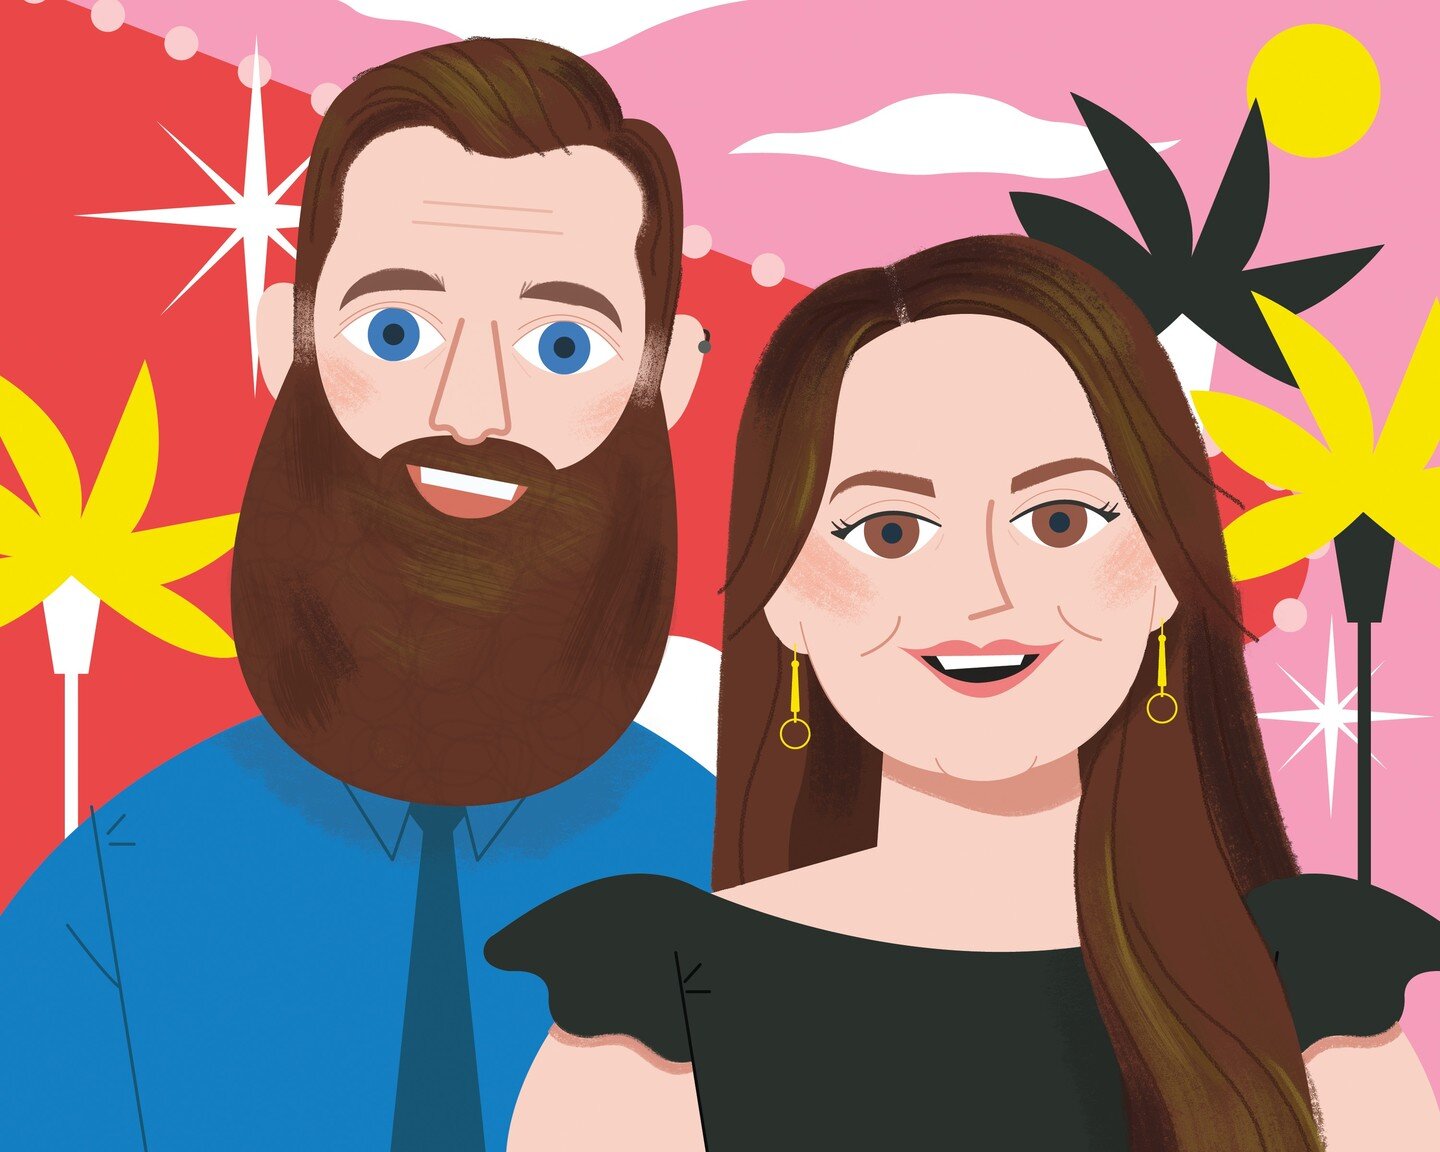 A custom portrait for Mark and Kate for their (Don't Bother to) Save the Date for their Las Vegas wedding!! 💍👩&zwj;❤️&zwj;👨💐

#illustration #illustrationartists #design #artistsofinstagram #art #artist #portrait #creative #weddinggiftsidea #weddi